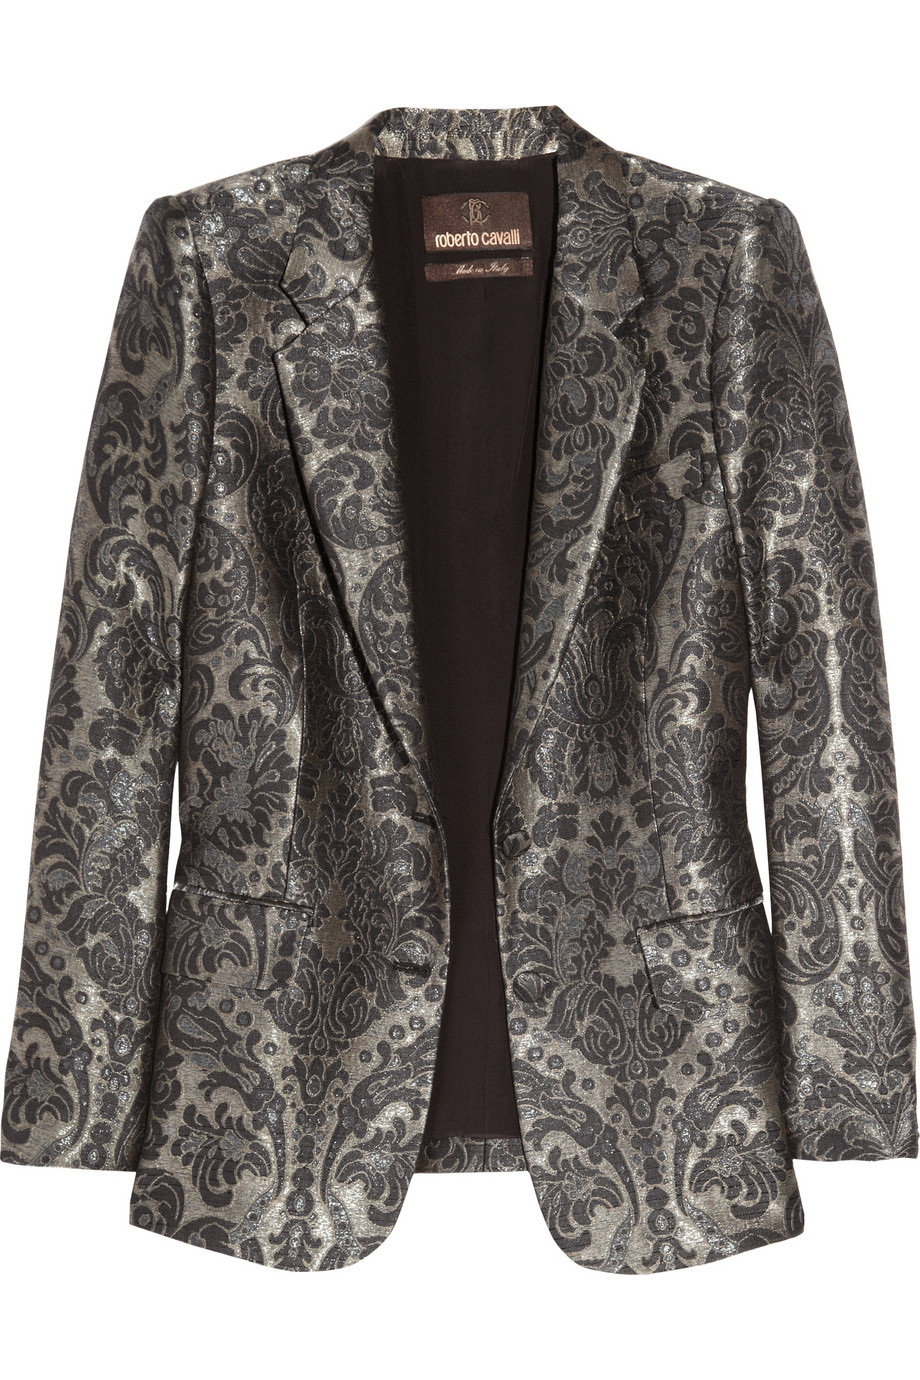 Roberto Cavalli Silk-blend Jacquard Jacket in Gray - Lyst